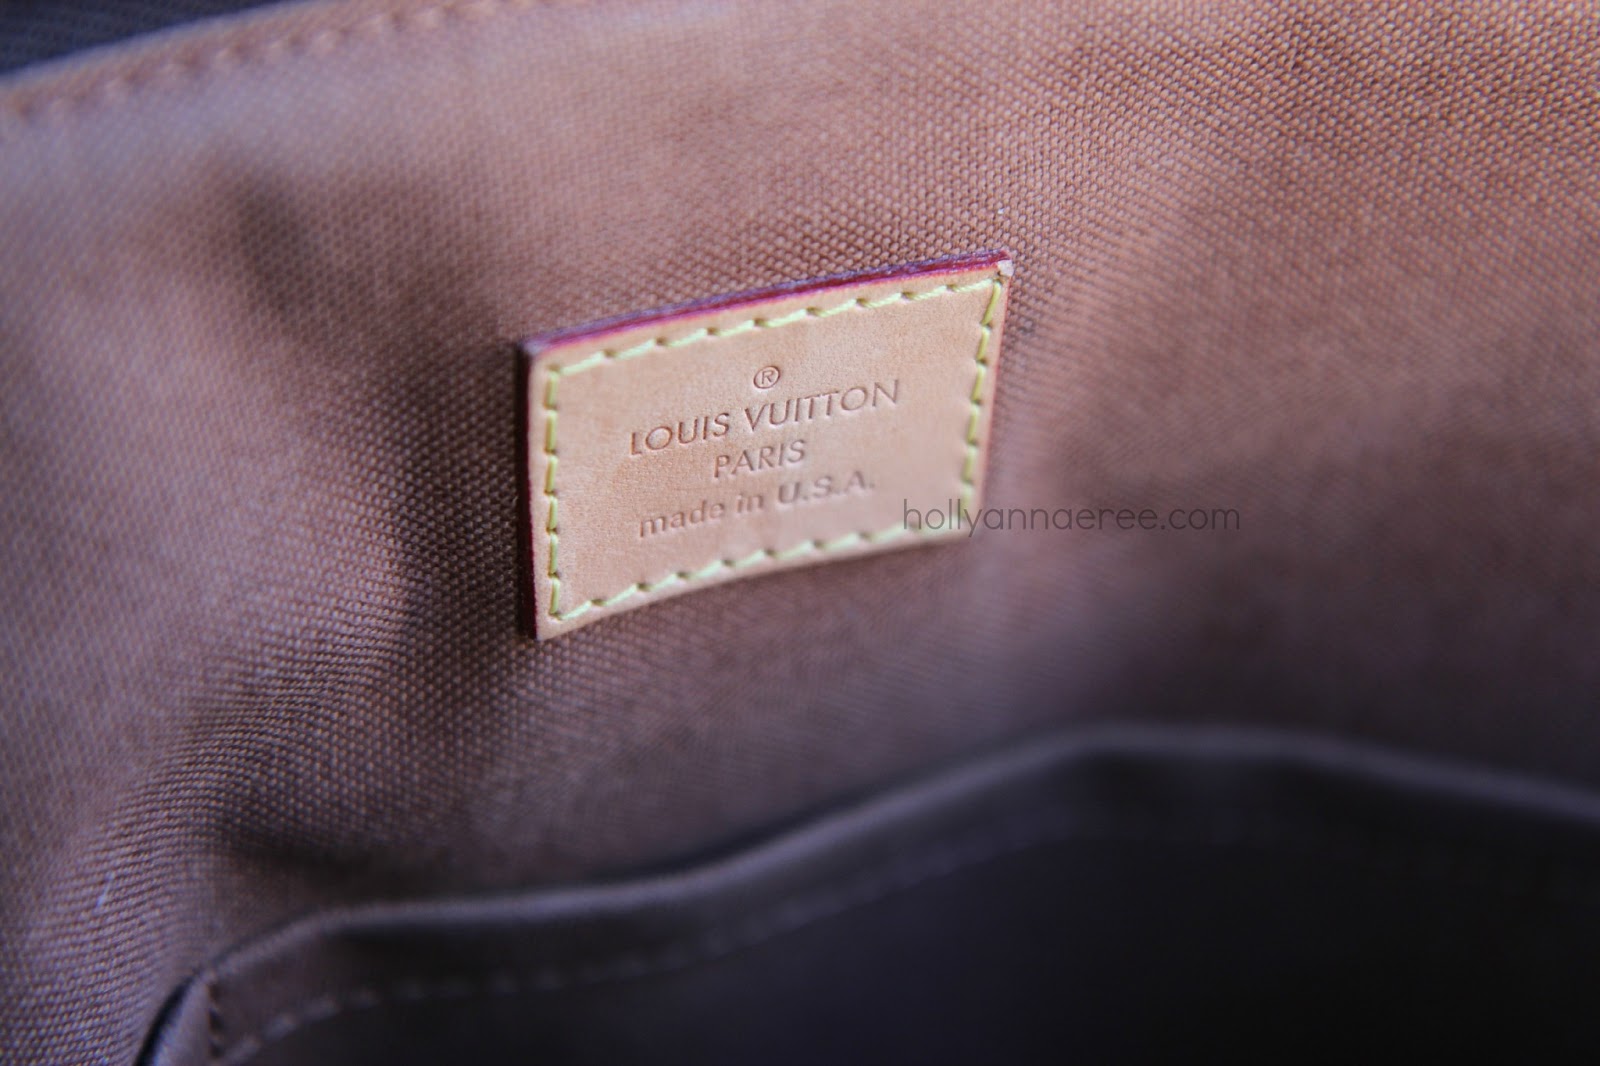 Holly Ann-AeRee 2.0: Mom's Well Loved Louis Vuitton Tivoli PM